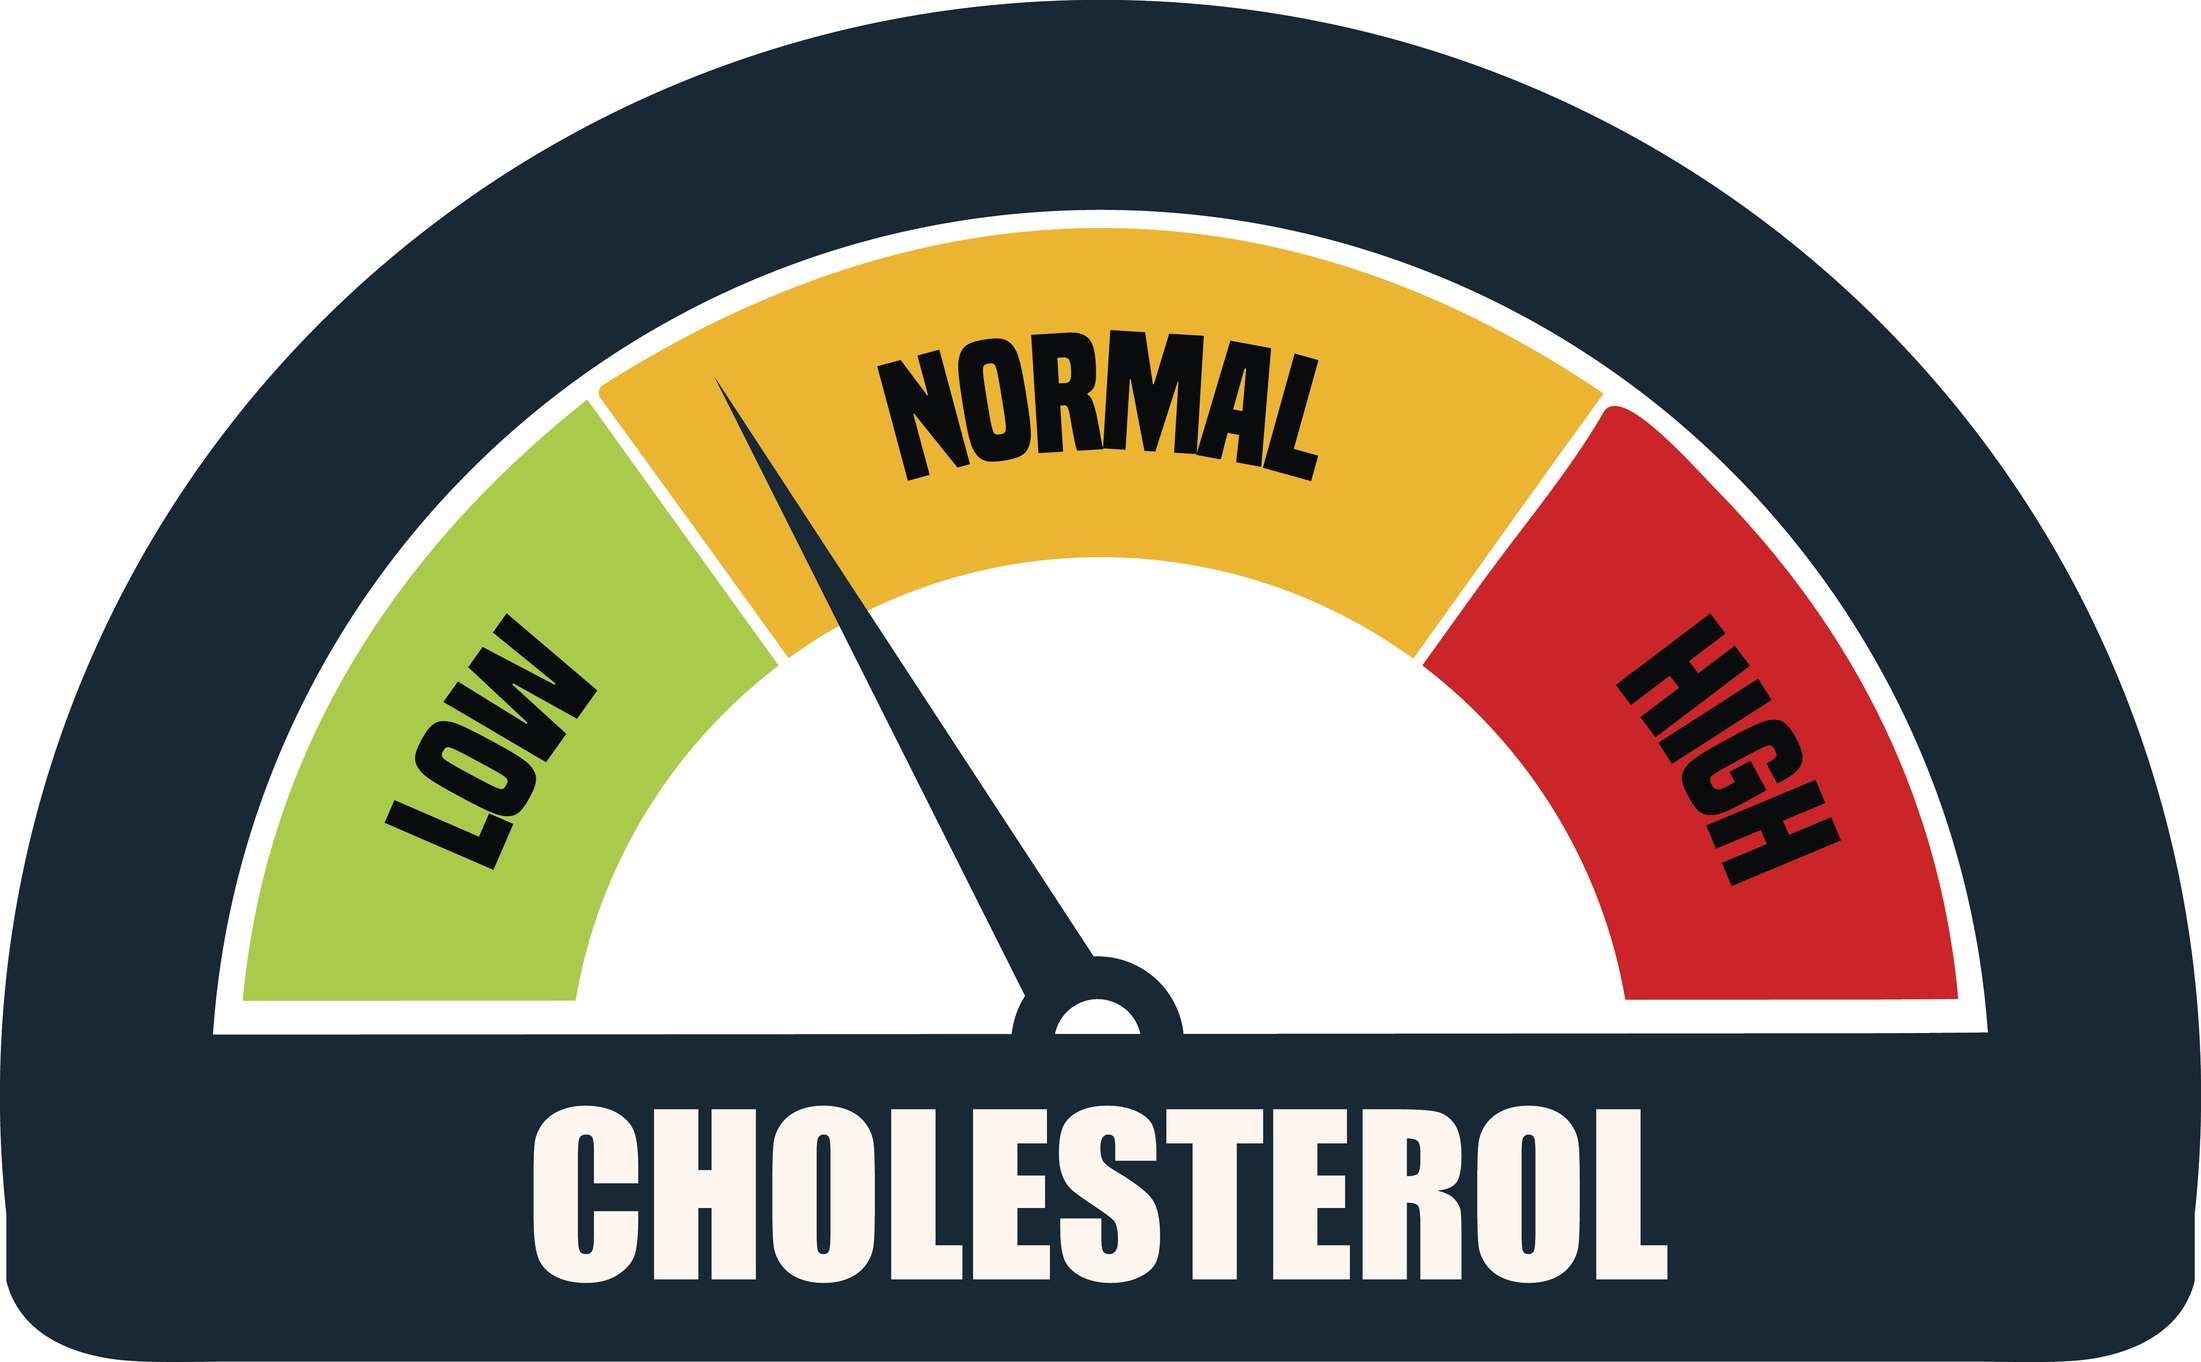 ldl cholesterol range